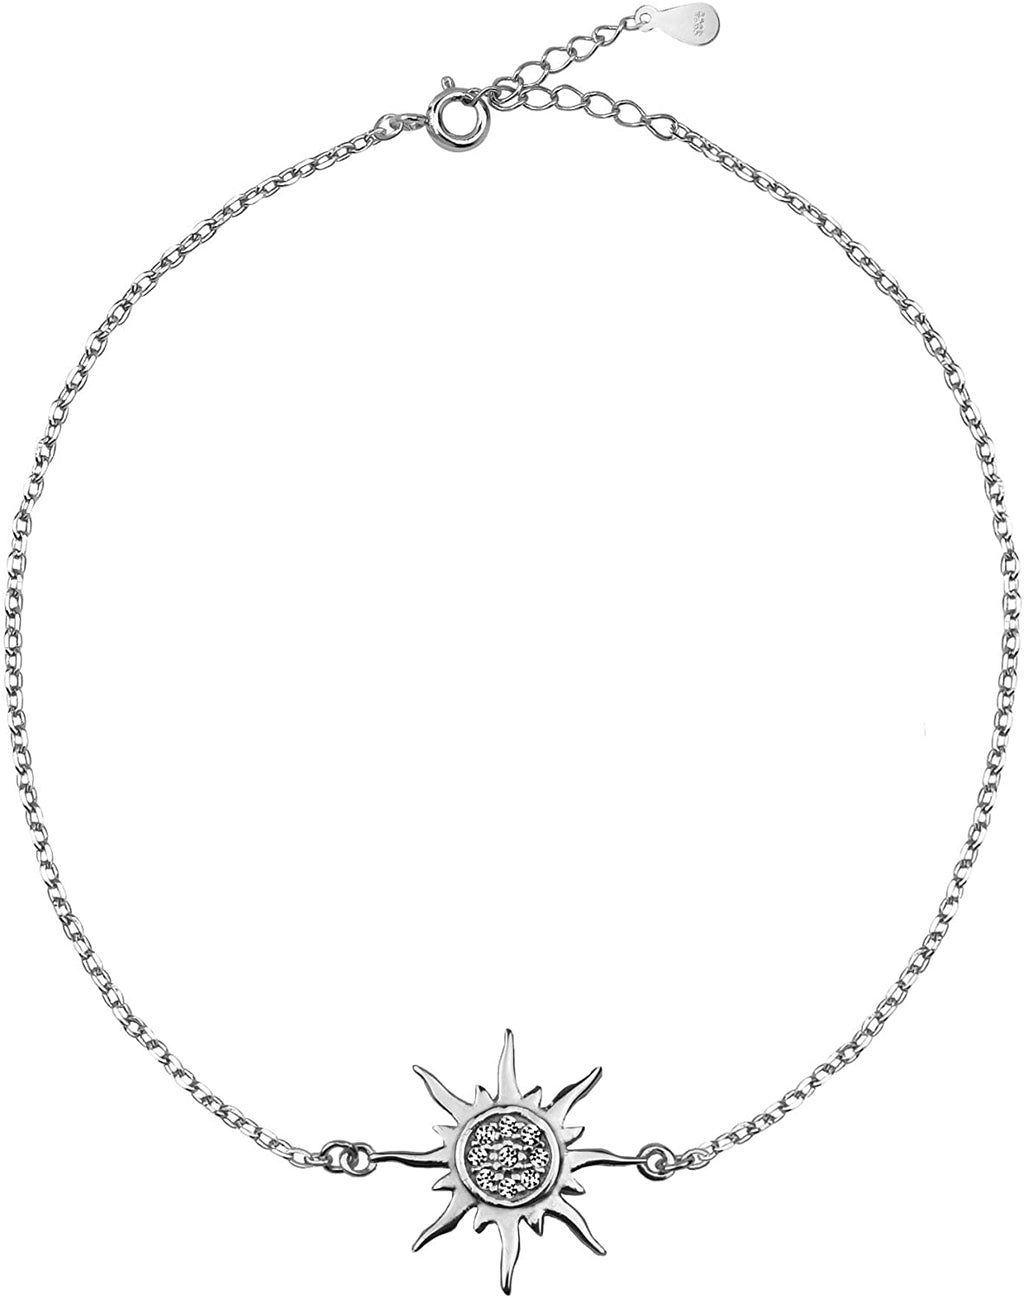 Sofia Milani - Women's Bracelet 925 Silver - with Zirconia Stones - Star Sun Pendant - 30215